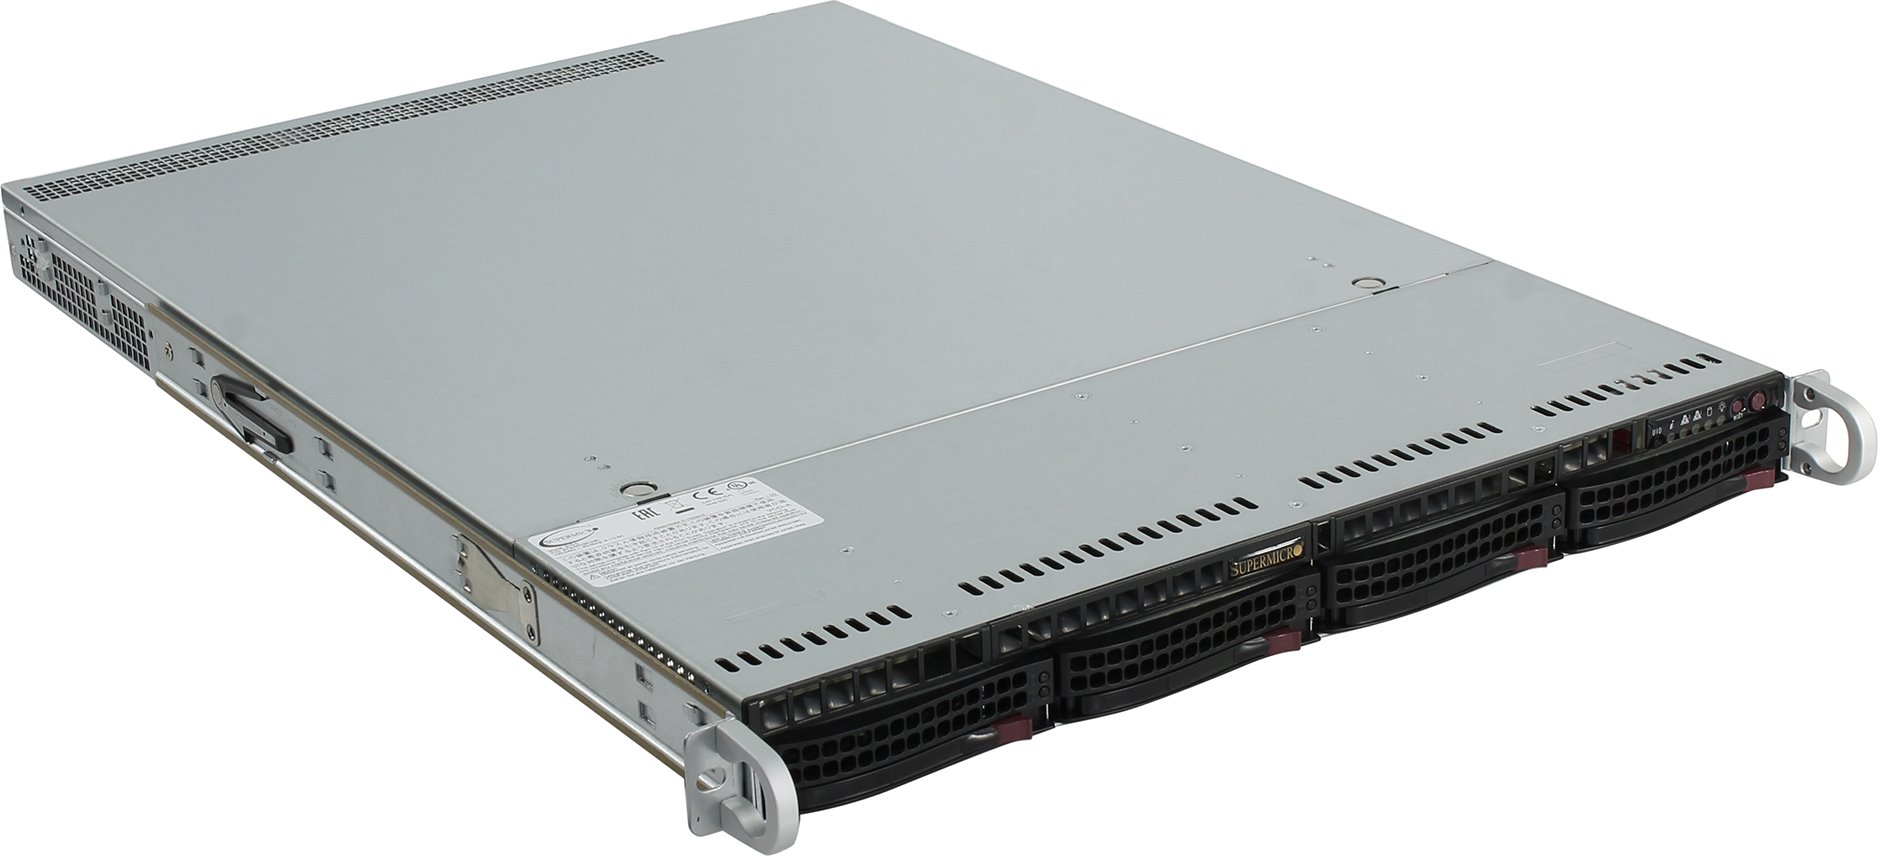 Платформа Supermicro SuperServer 1U 5019P-MR noCPU(1)Scalable/TDP 70-165W/ no DIMM(6)/ SATARAID HDD(4)LFF/ 2xGbE/1xFH, M2/ 2x400W